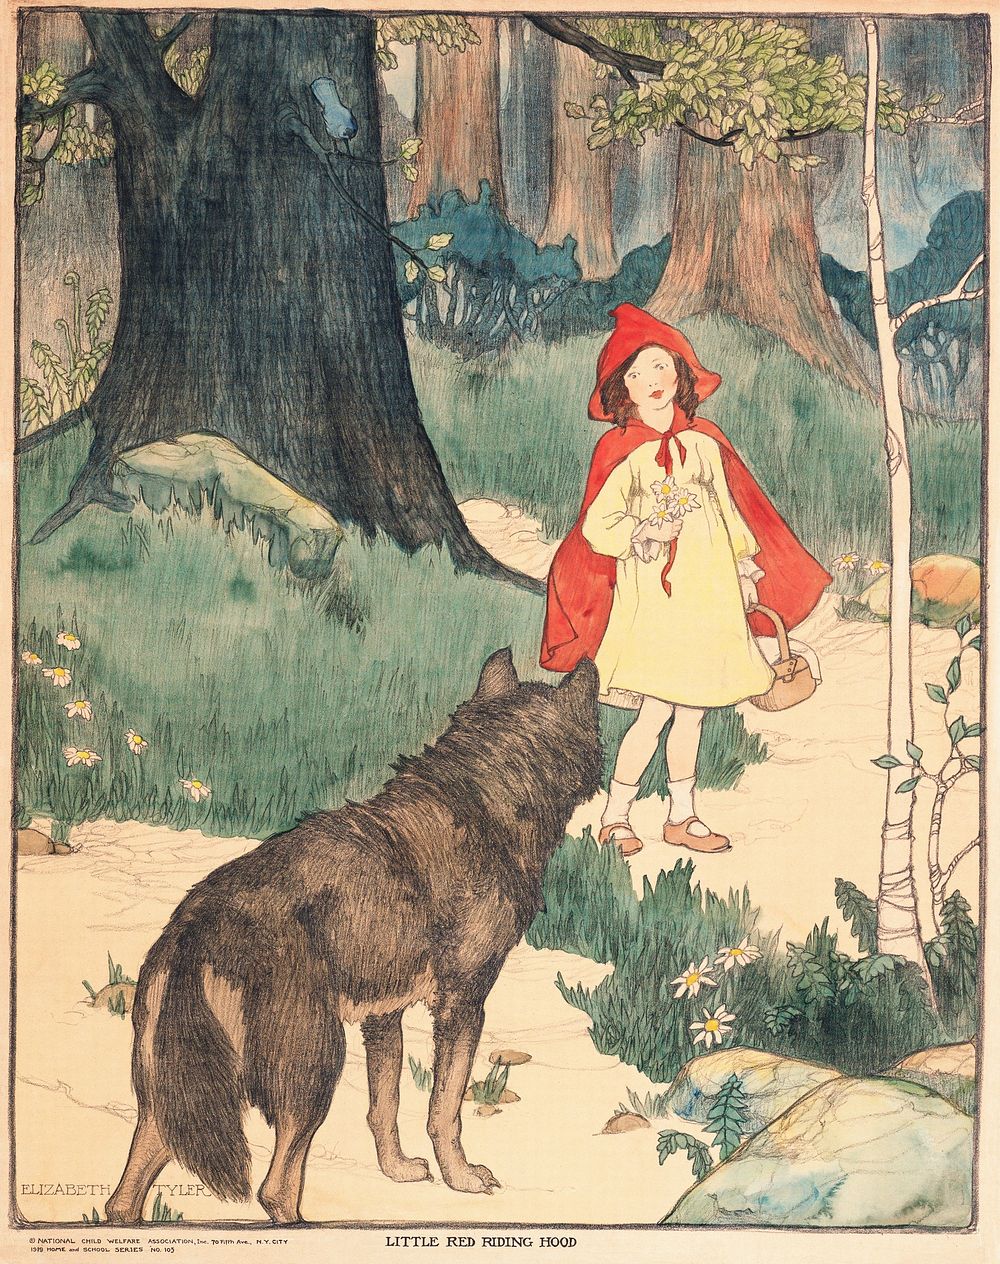 Little Red Riding Hood (1919), vintage illustration by Elizabeth Tyler. Original public domain image from Digital…